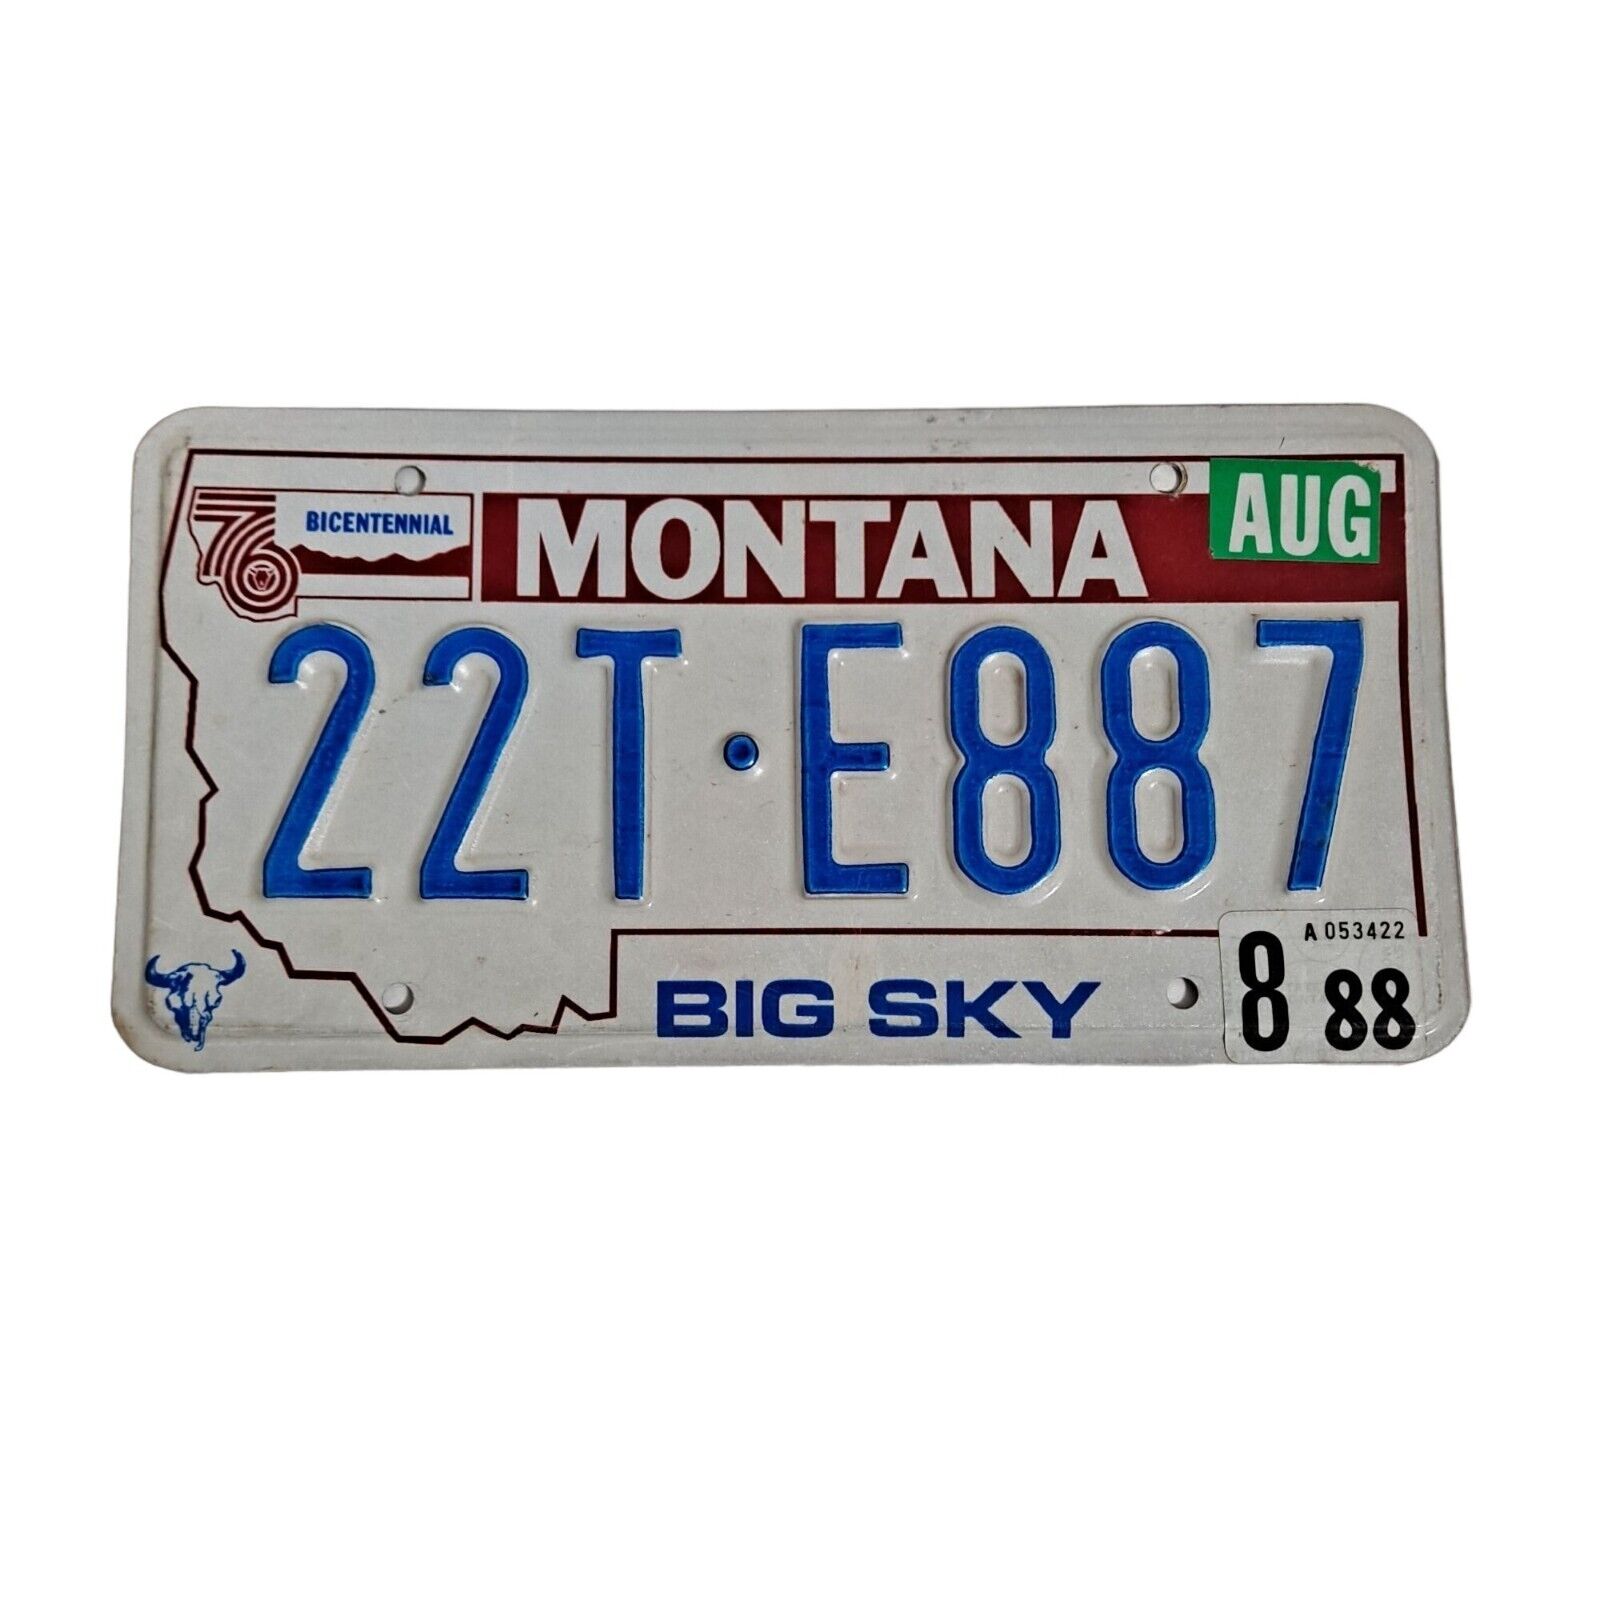 Montana License Plate 1988 Bicentennial 22T-2E887 Big Sky Automobile Vintage